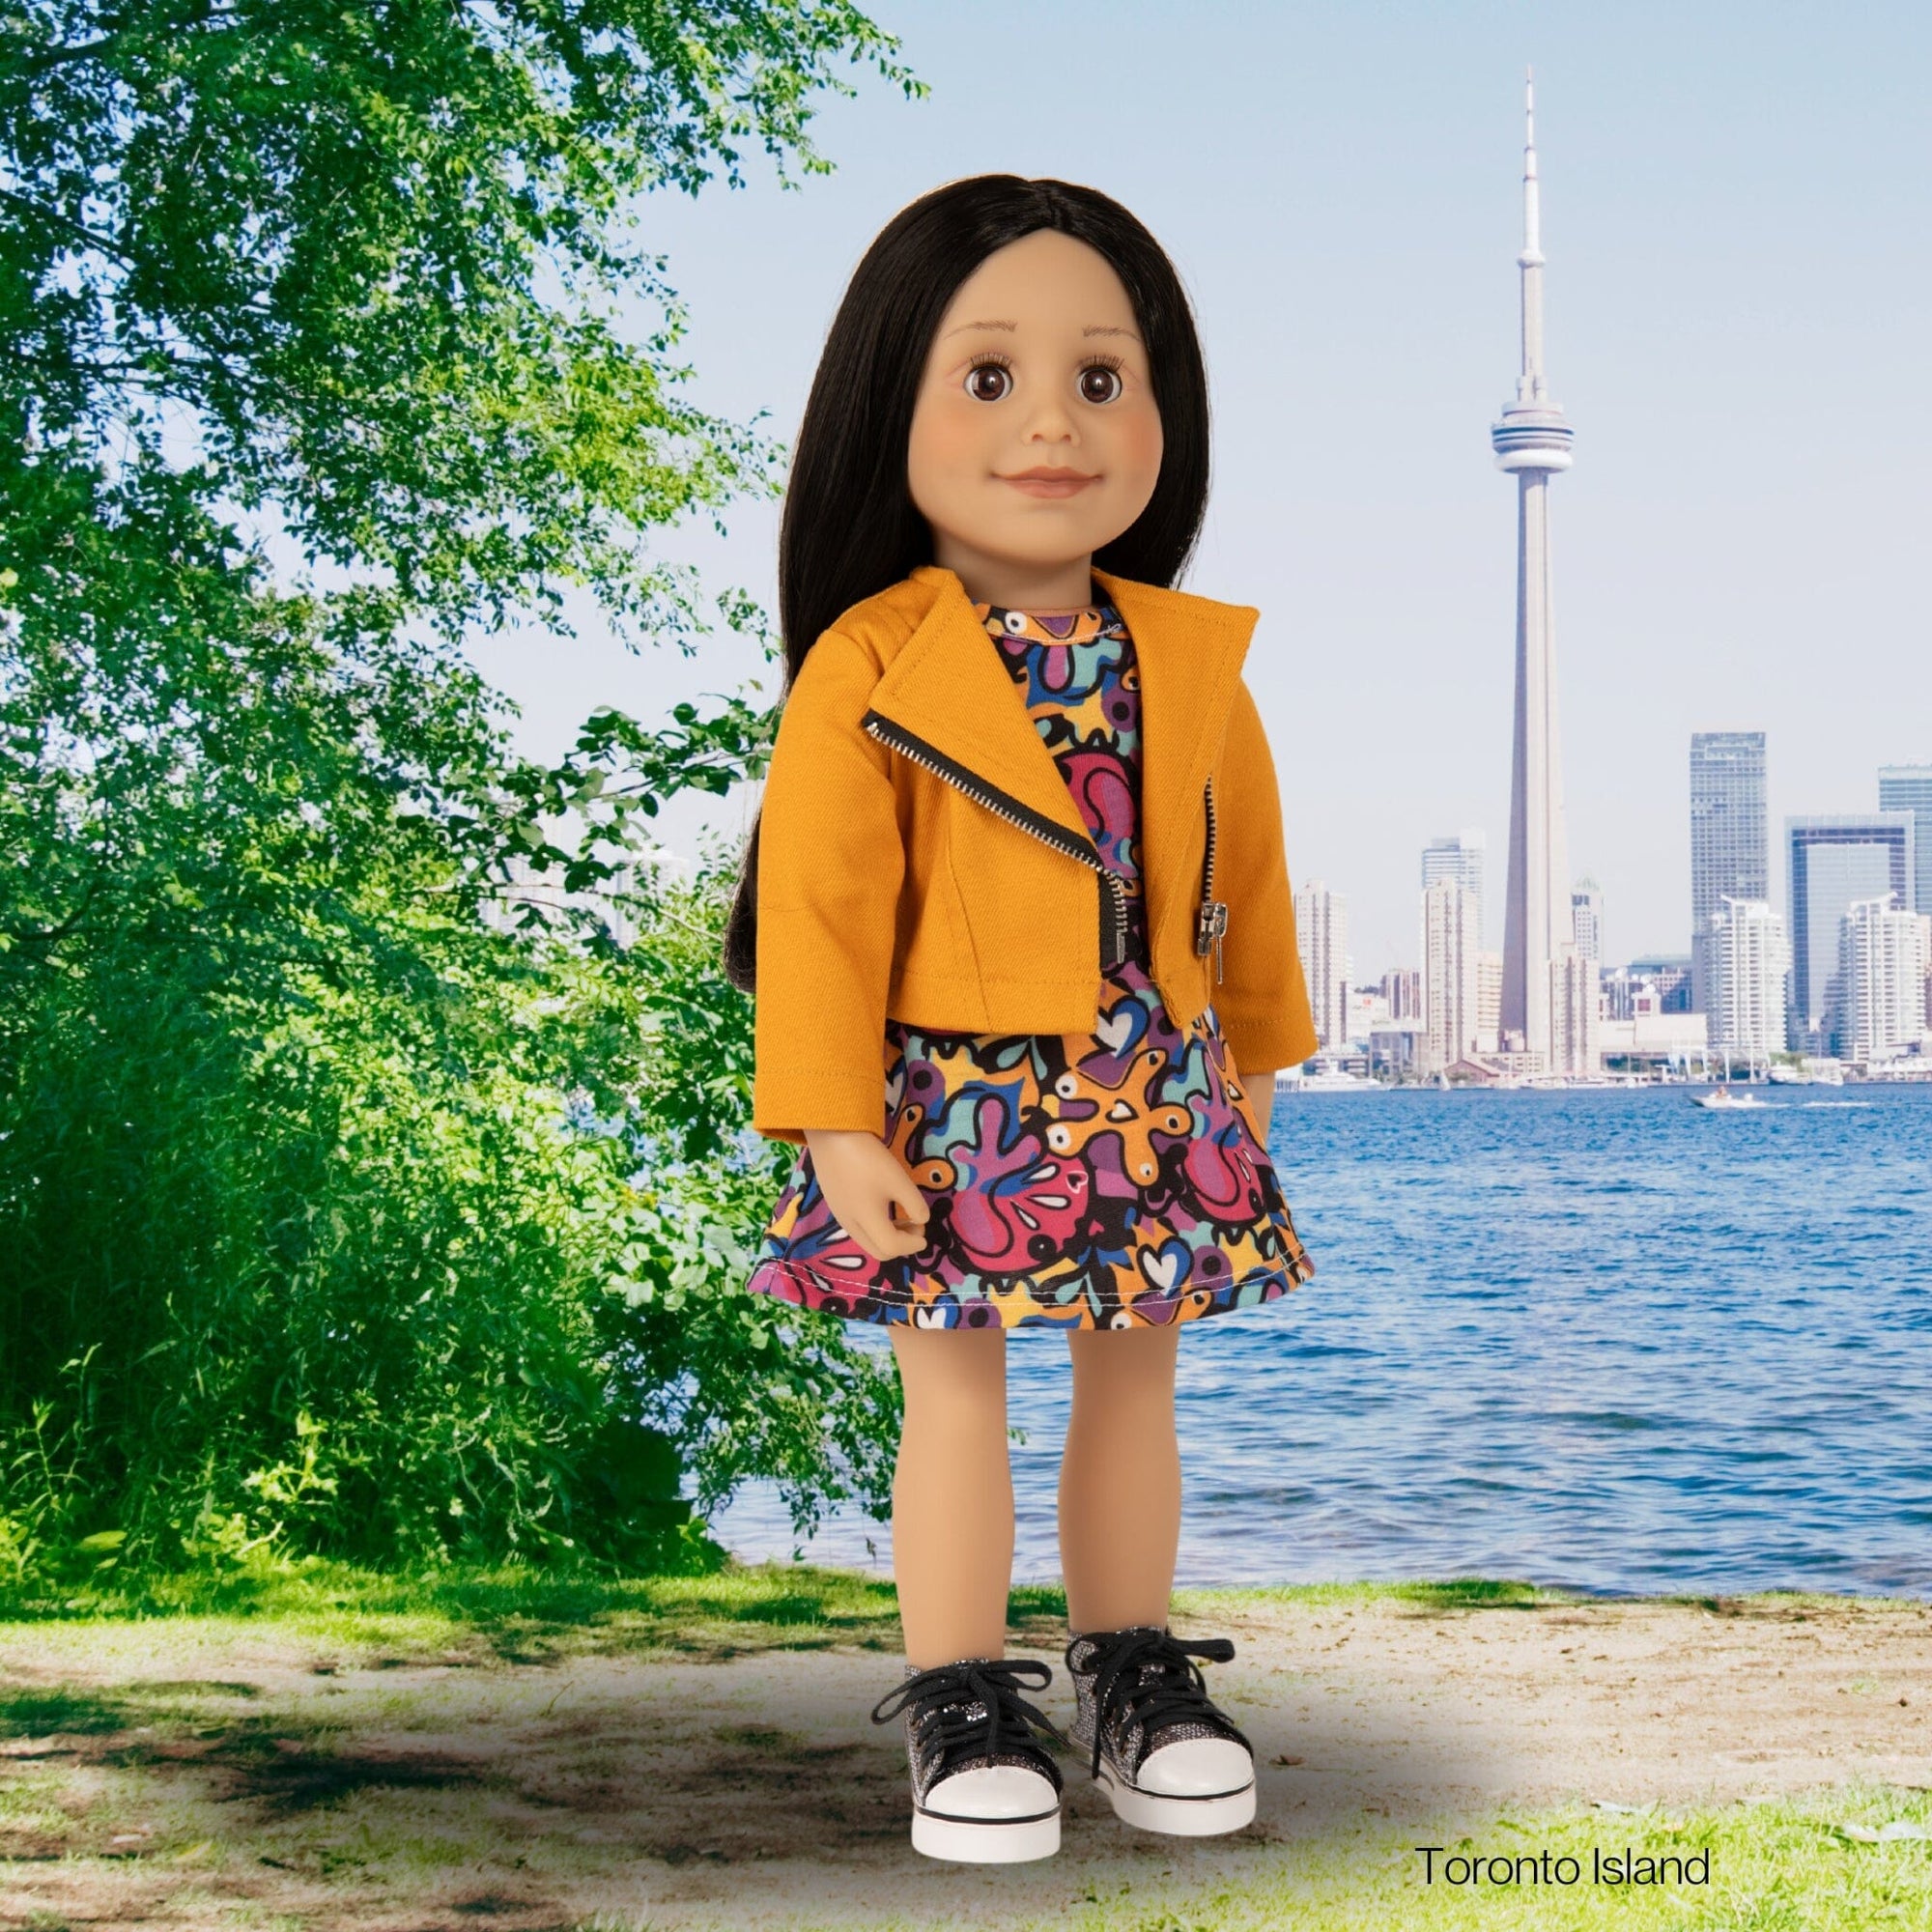 Maplelea doll Alexi from Toronto wearing orange jacket, print dress and metallic runners